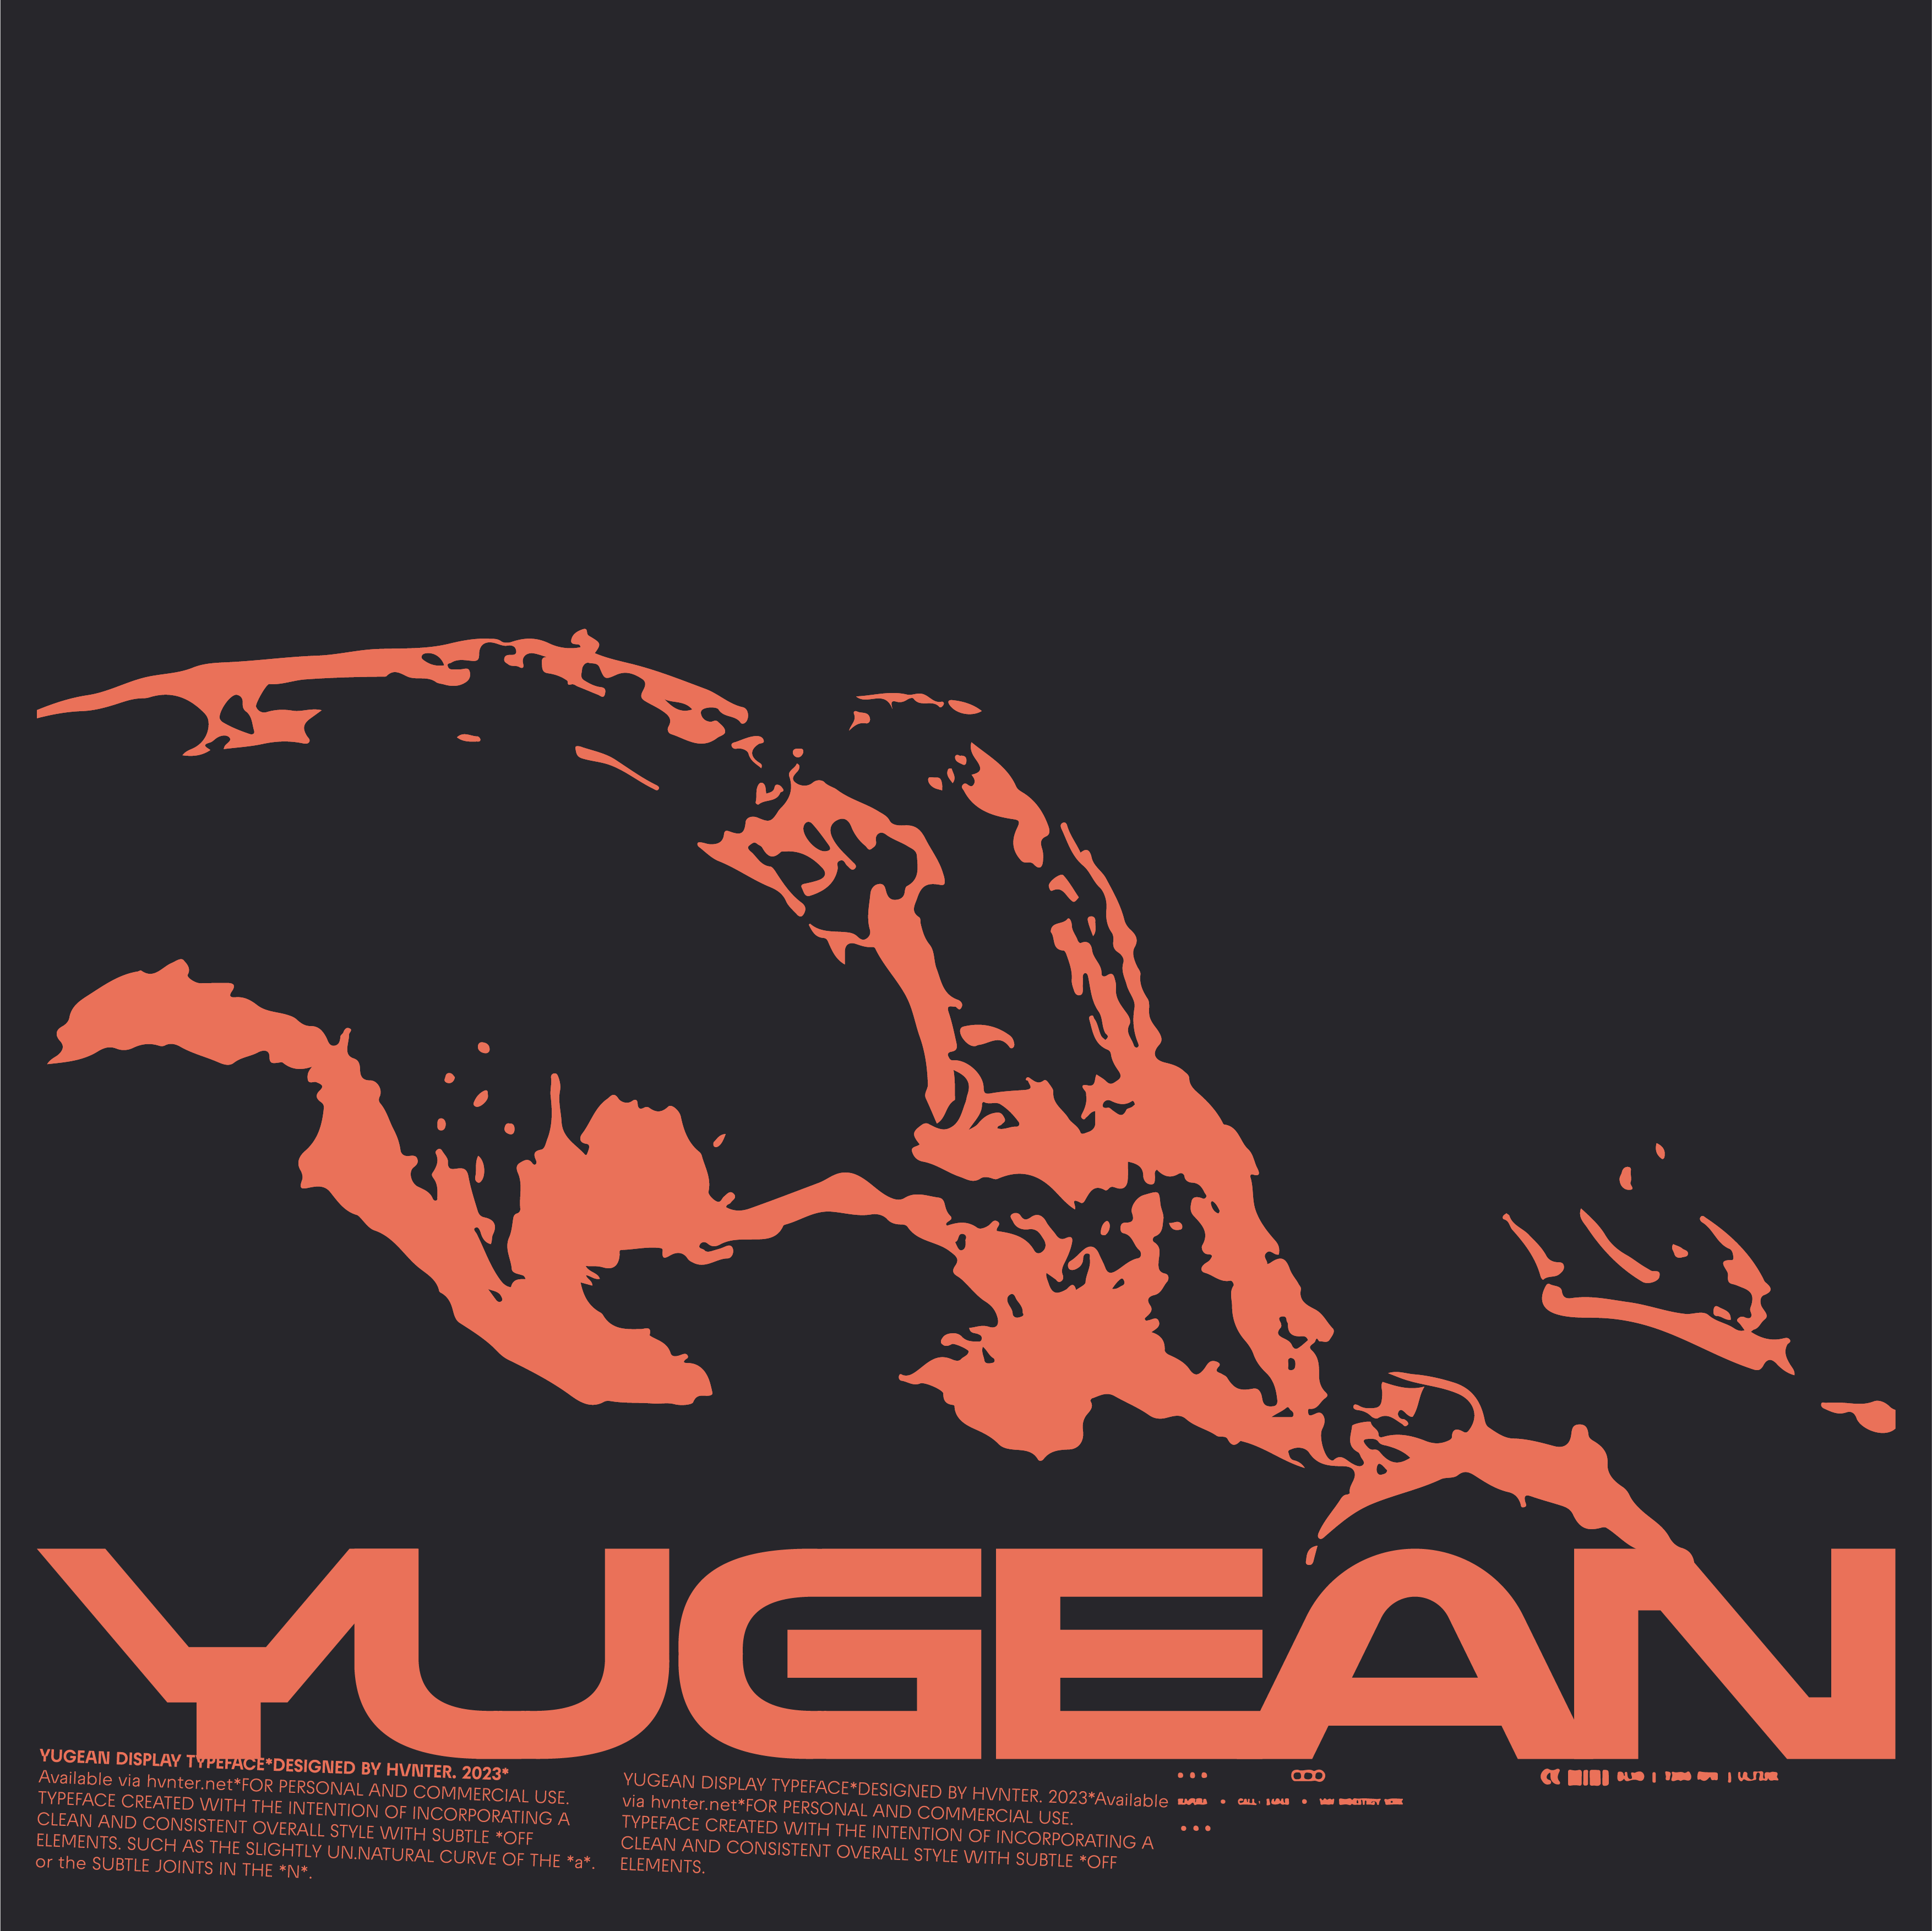 YUGEAN Typeface